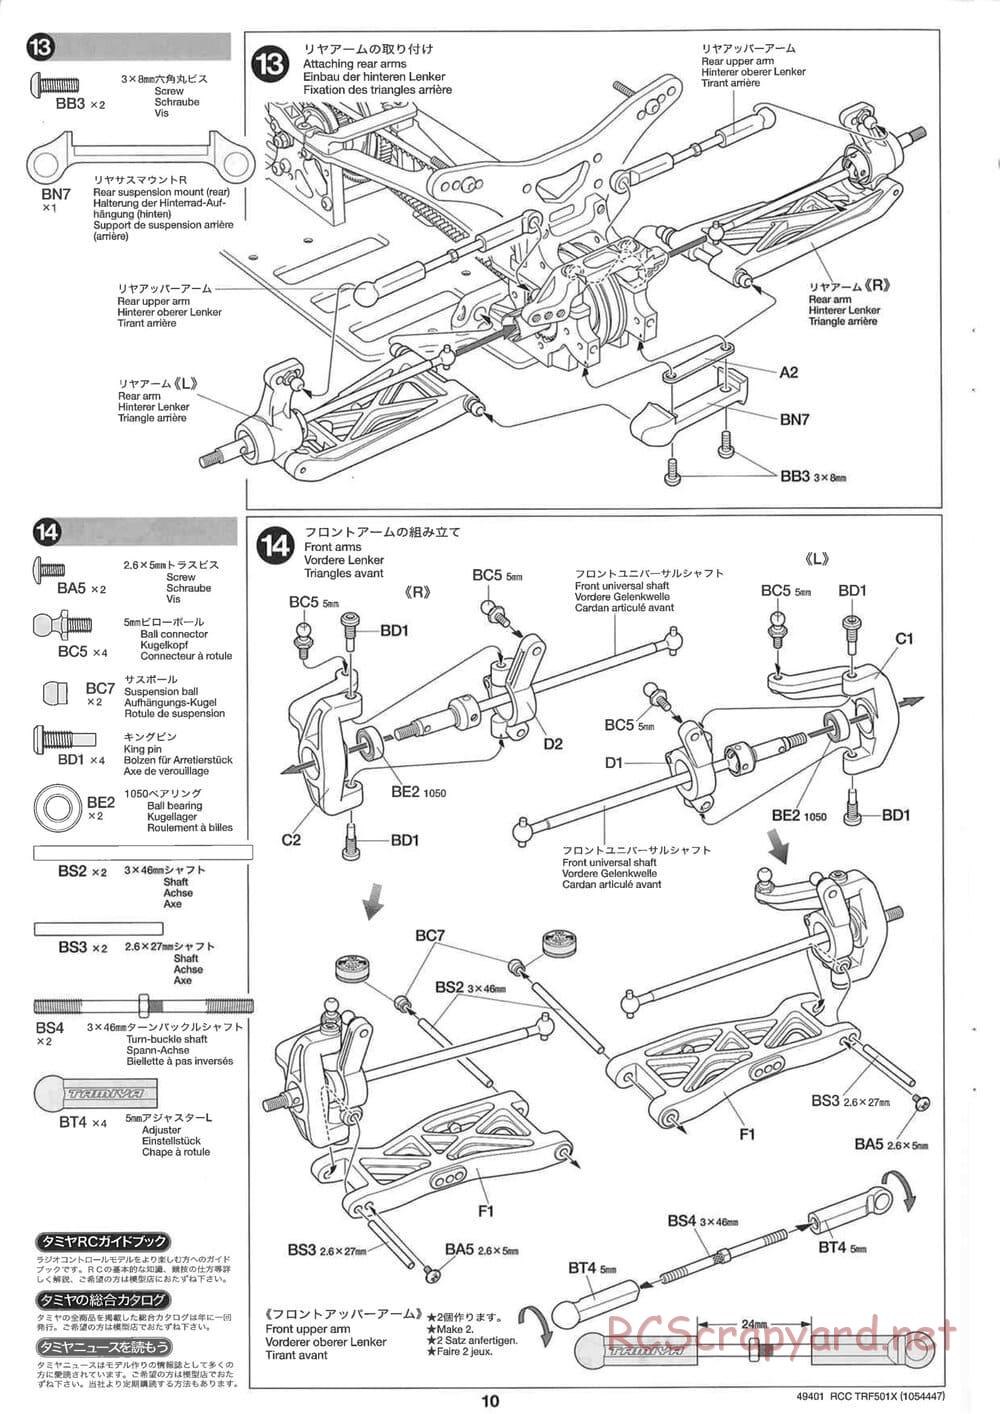 Tamiya - TRF501X Chassis - Manual - Page 10